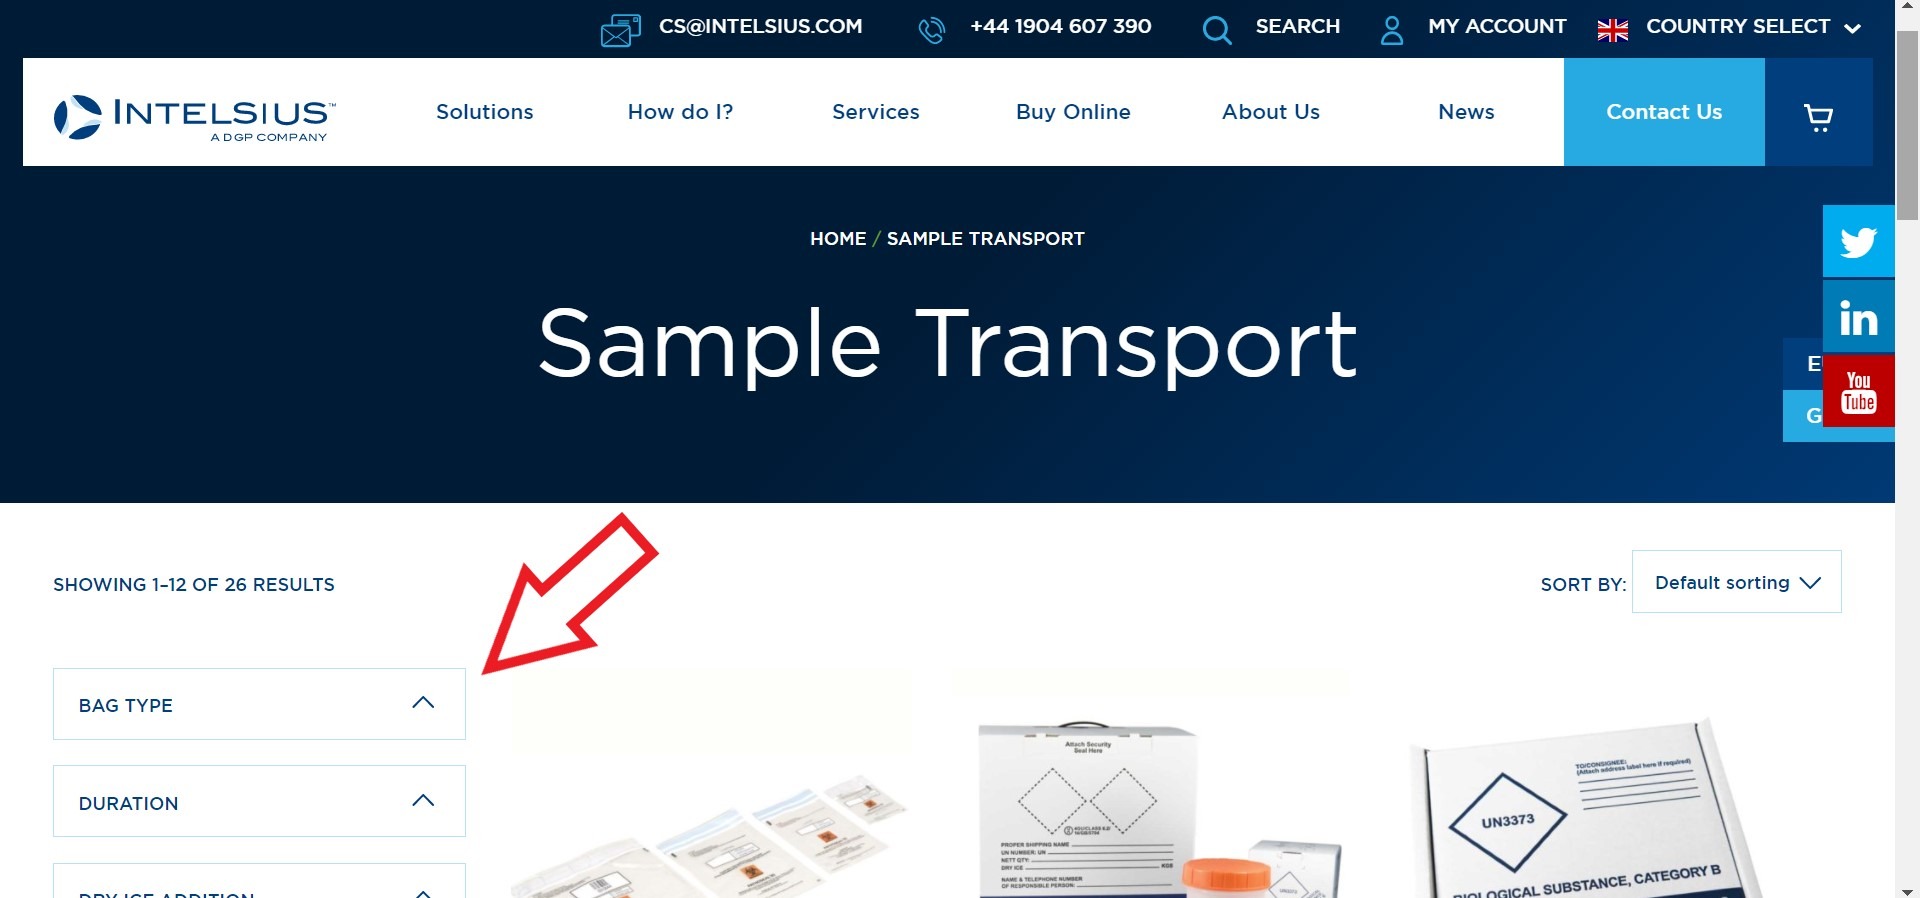 intelsius sample transport shop screenshot